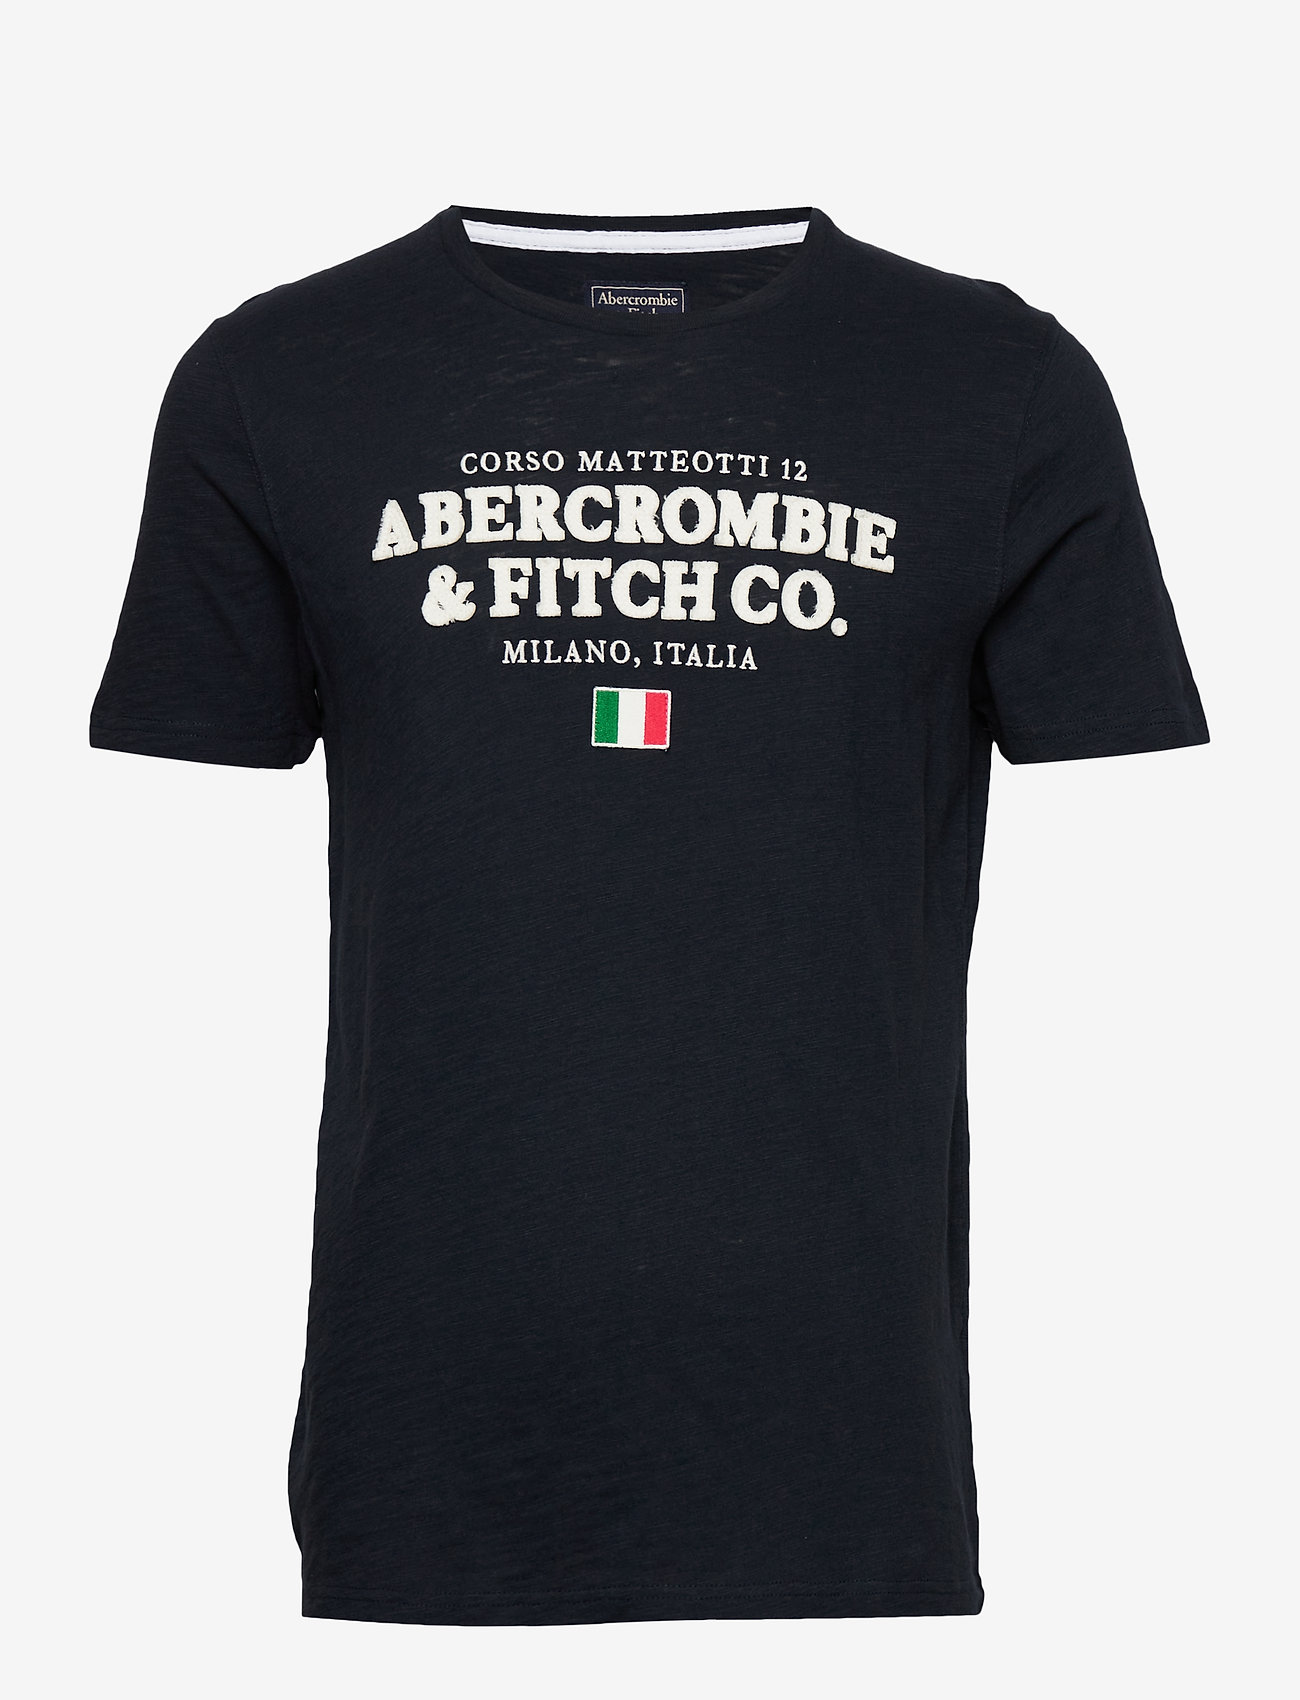 abercrombie tee shirt